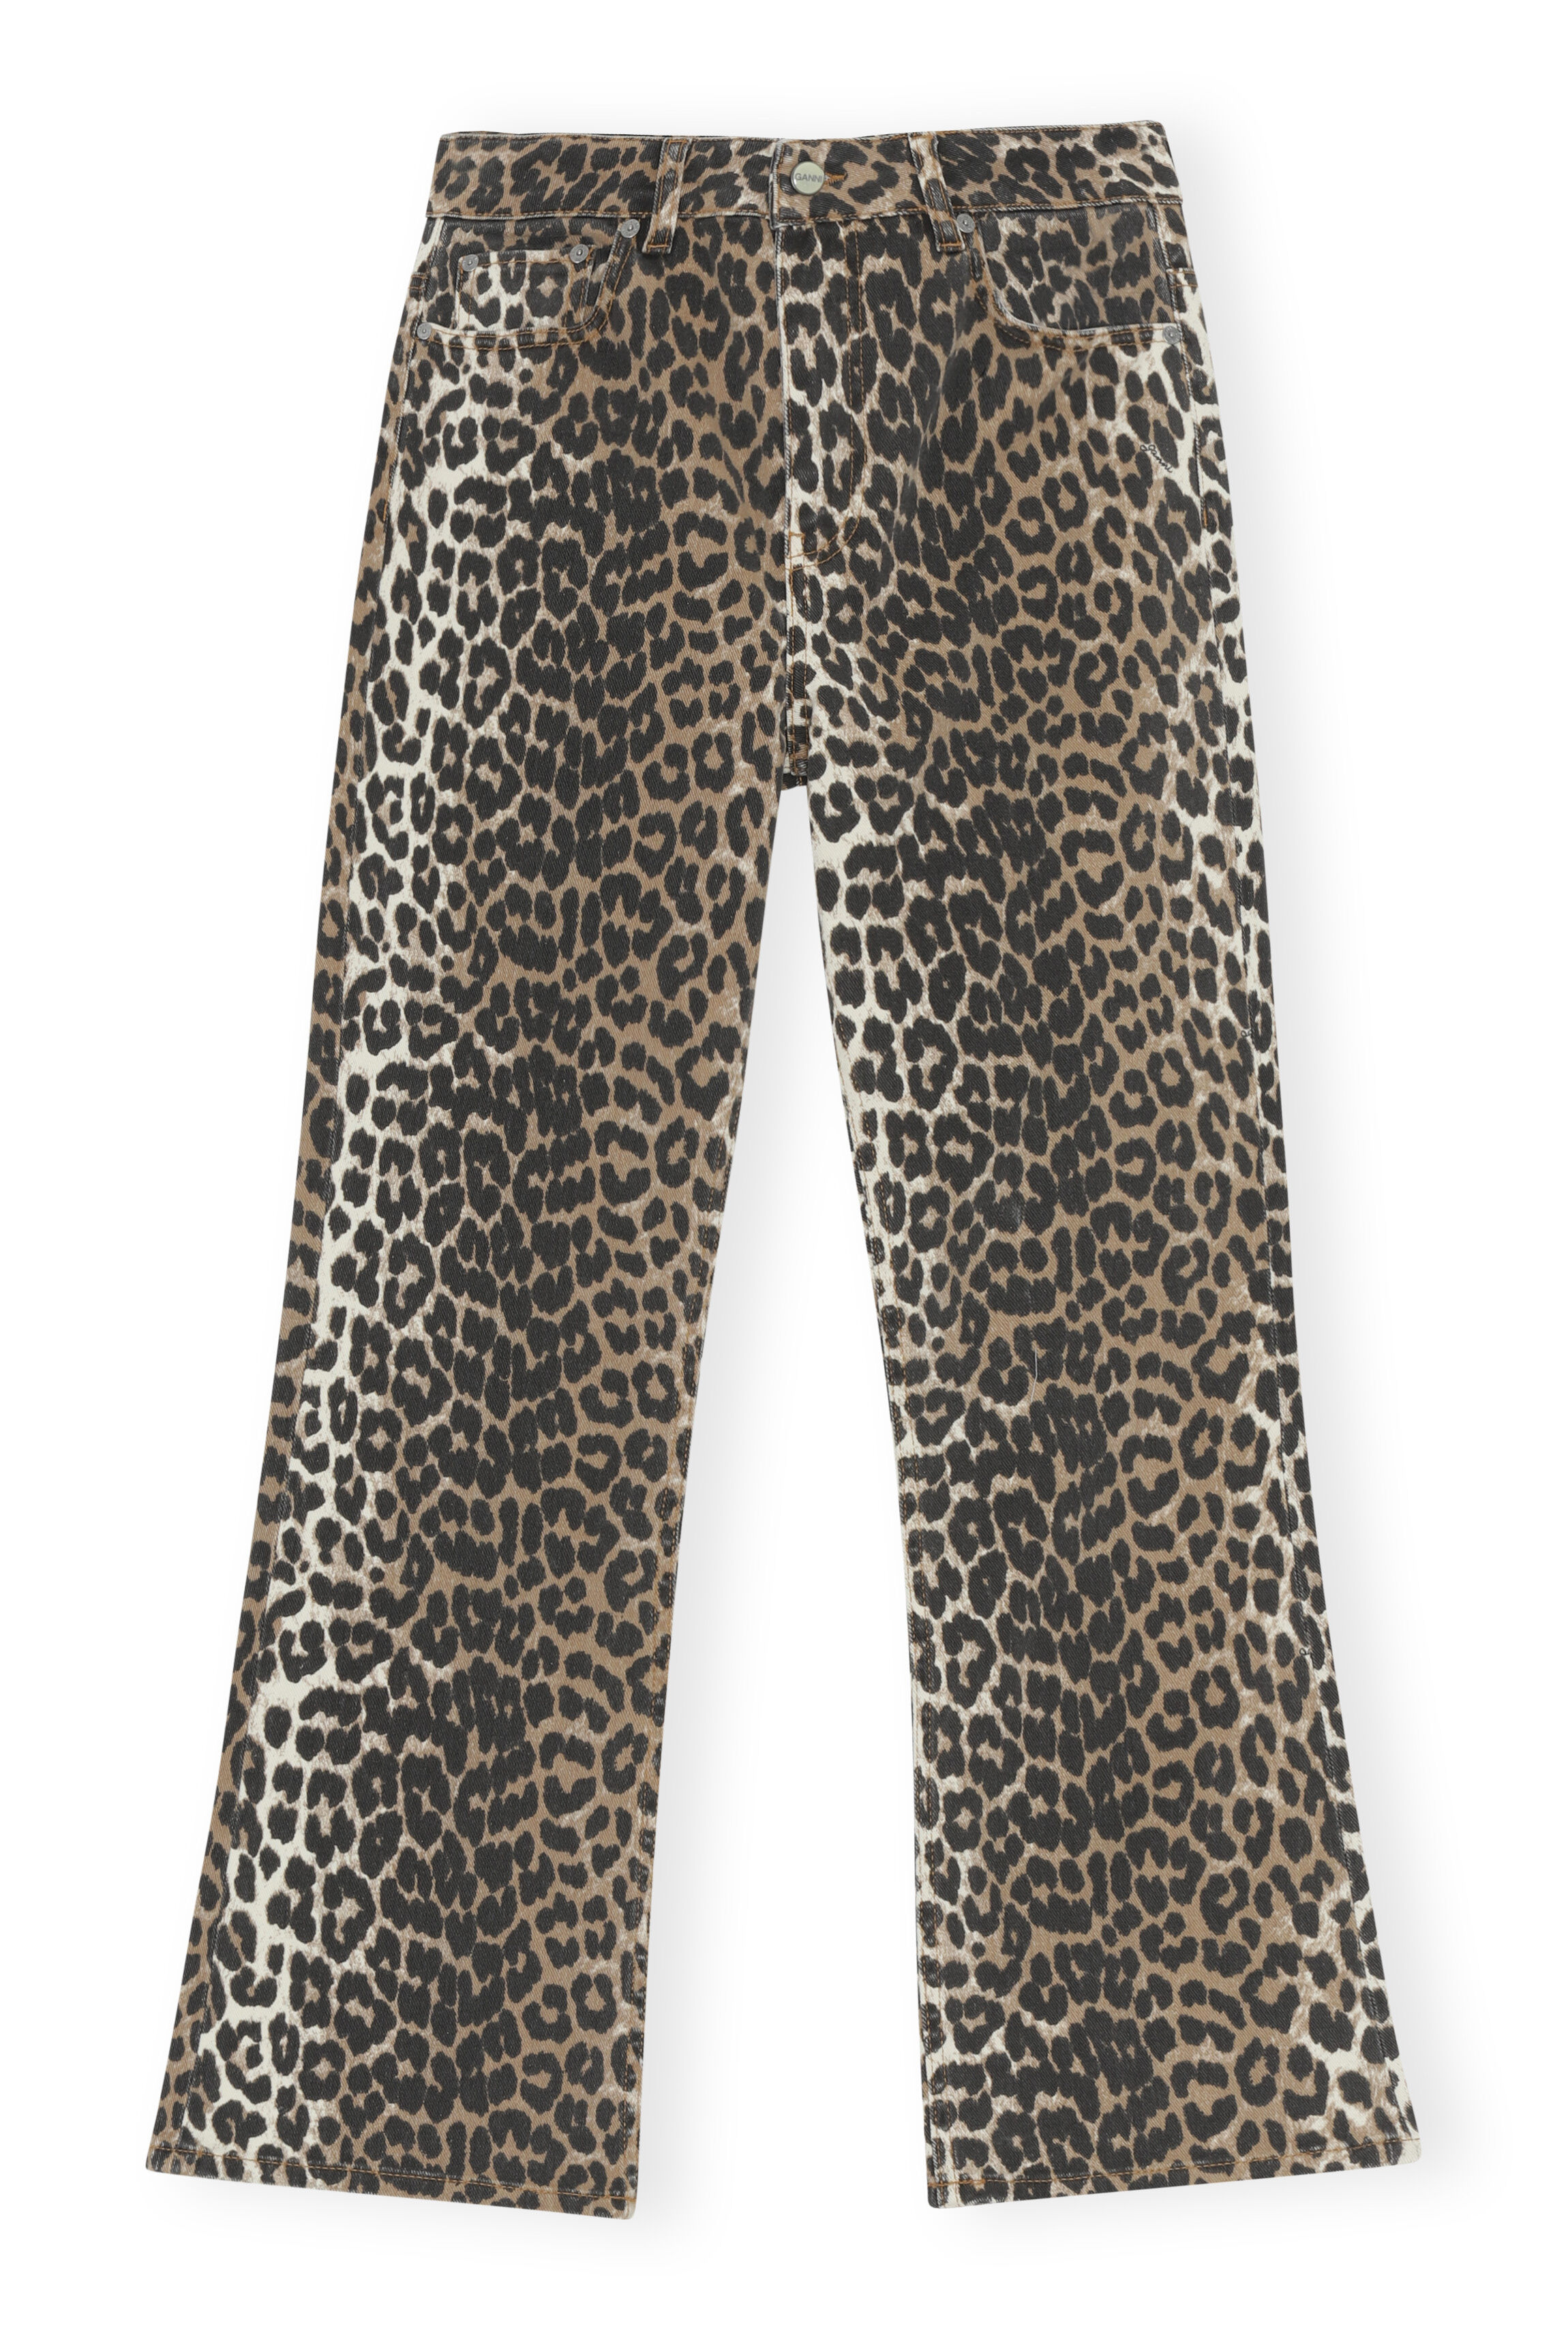 TOM FORD Velvet-trimmed leopard-print stretch-silk satin pants |  NET-A-PORTER